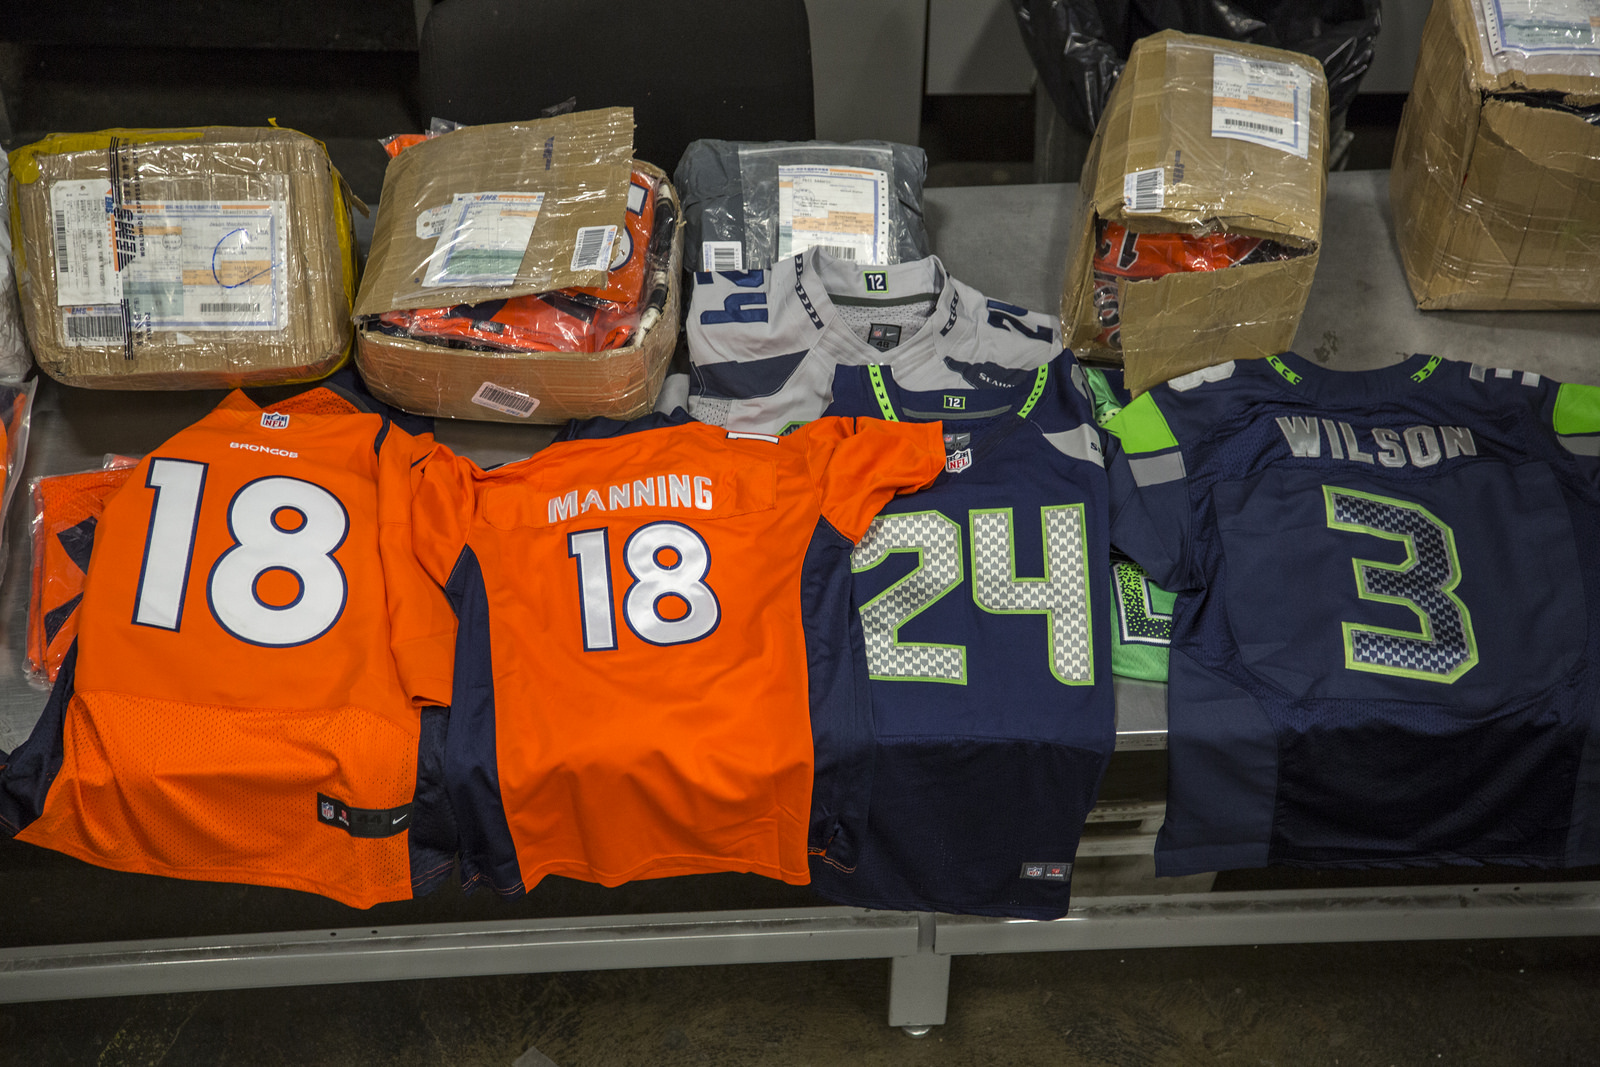 Piles of counterfeit football jerseys.